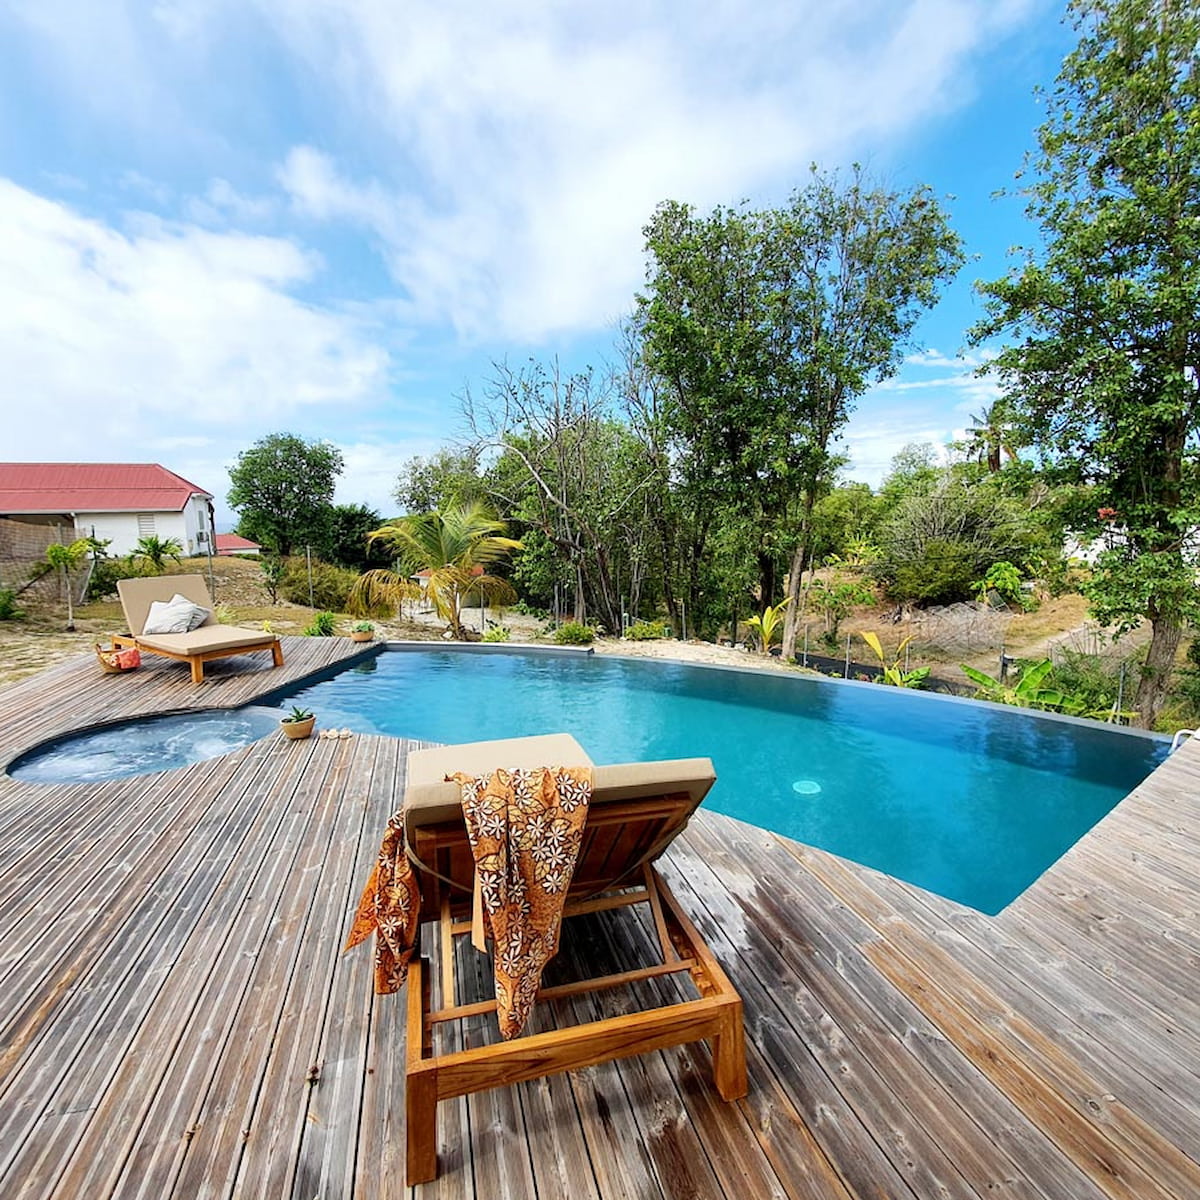 Kazatimoun marie galante villa piscine terrasse piscine transats accueil